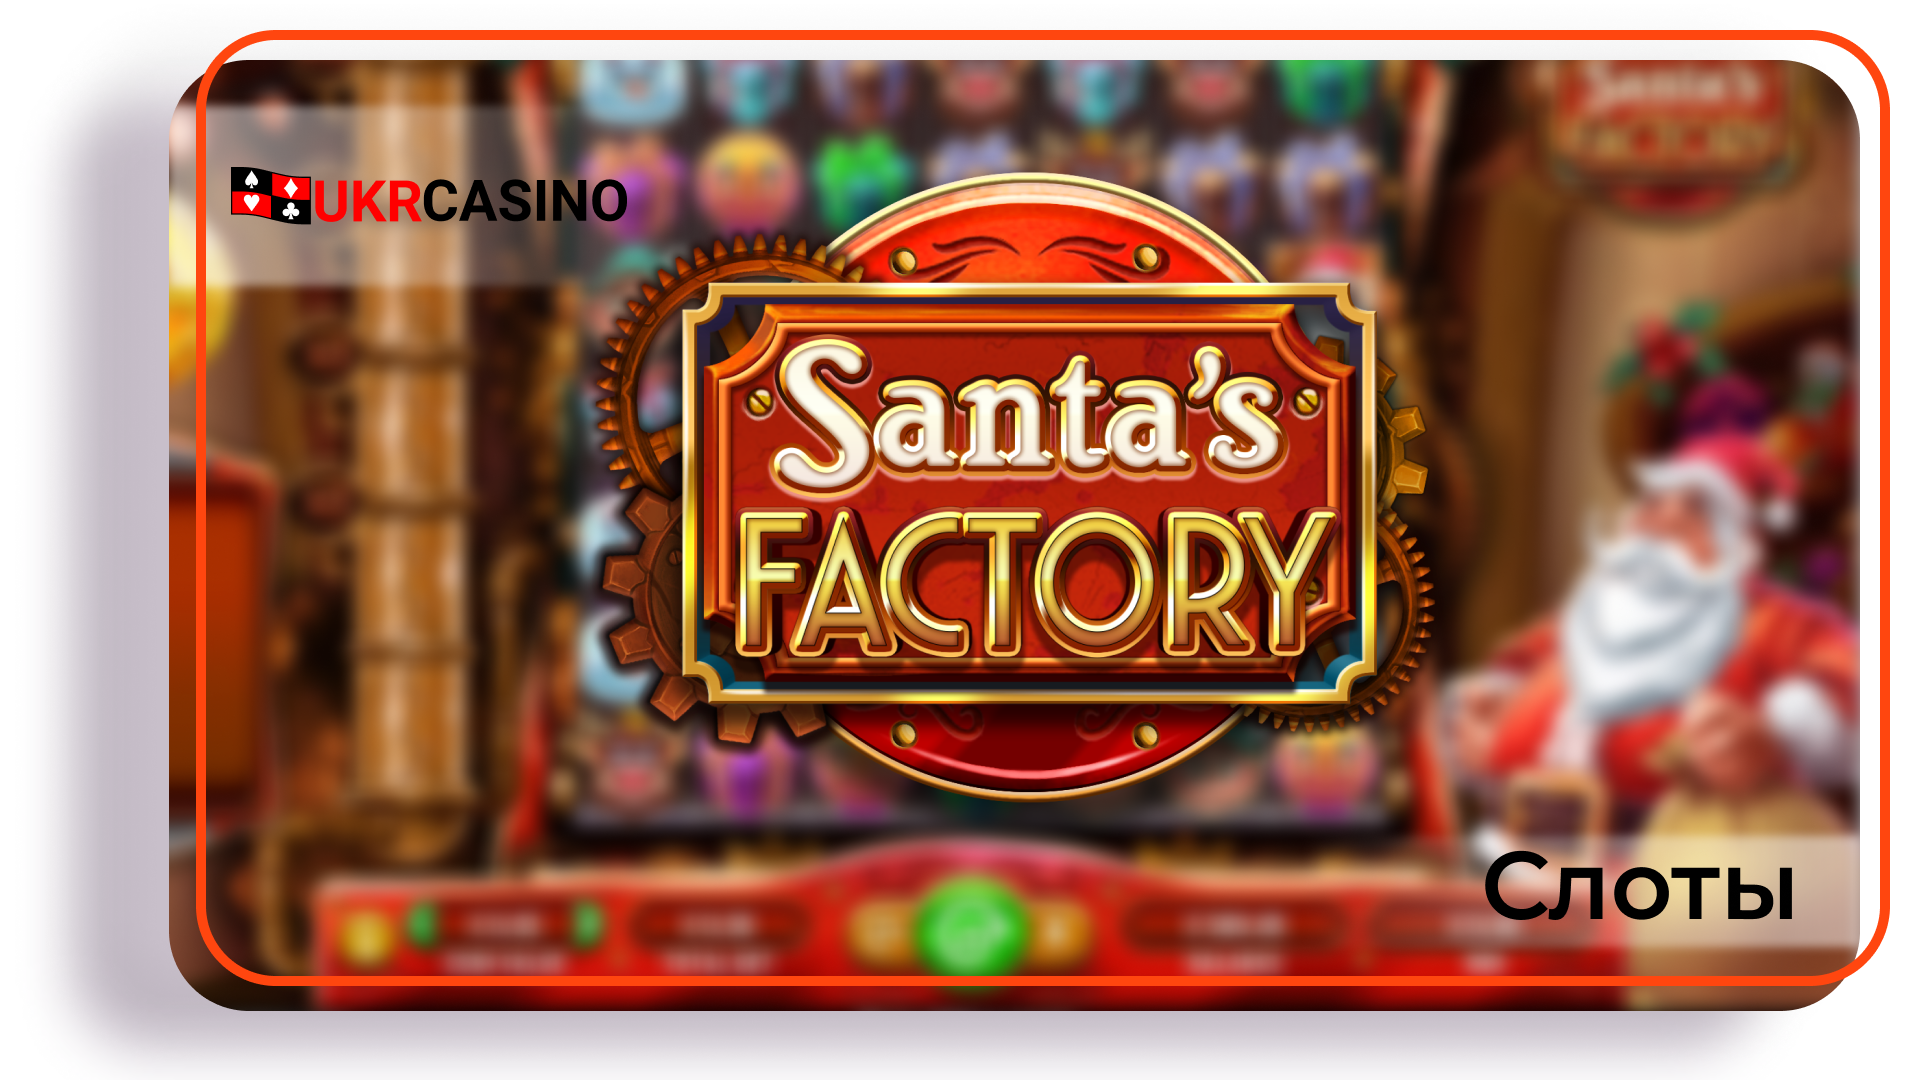 Santa's Factory - GameArt